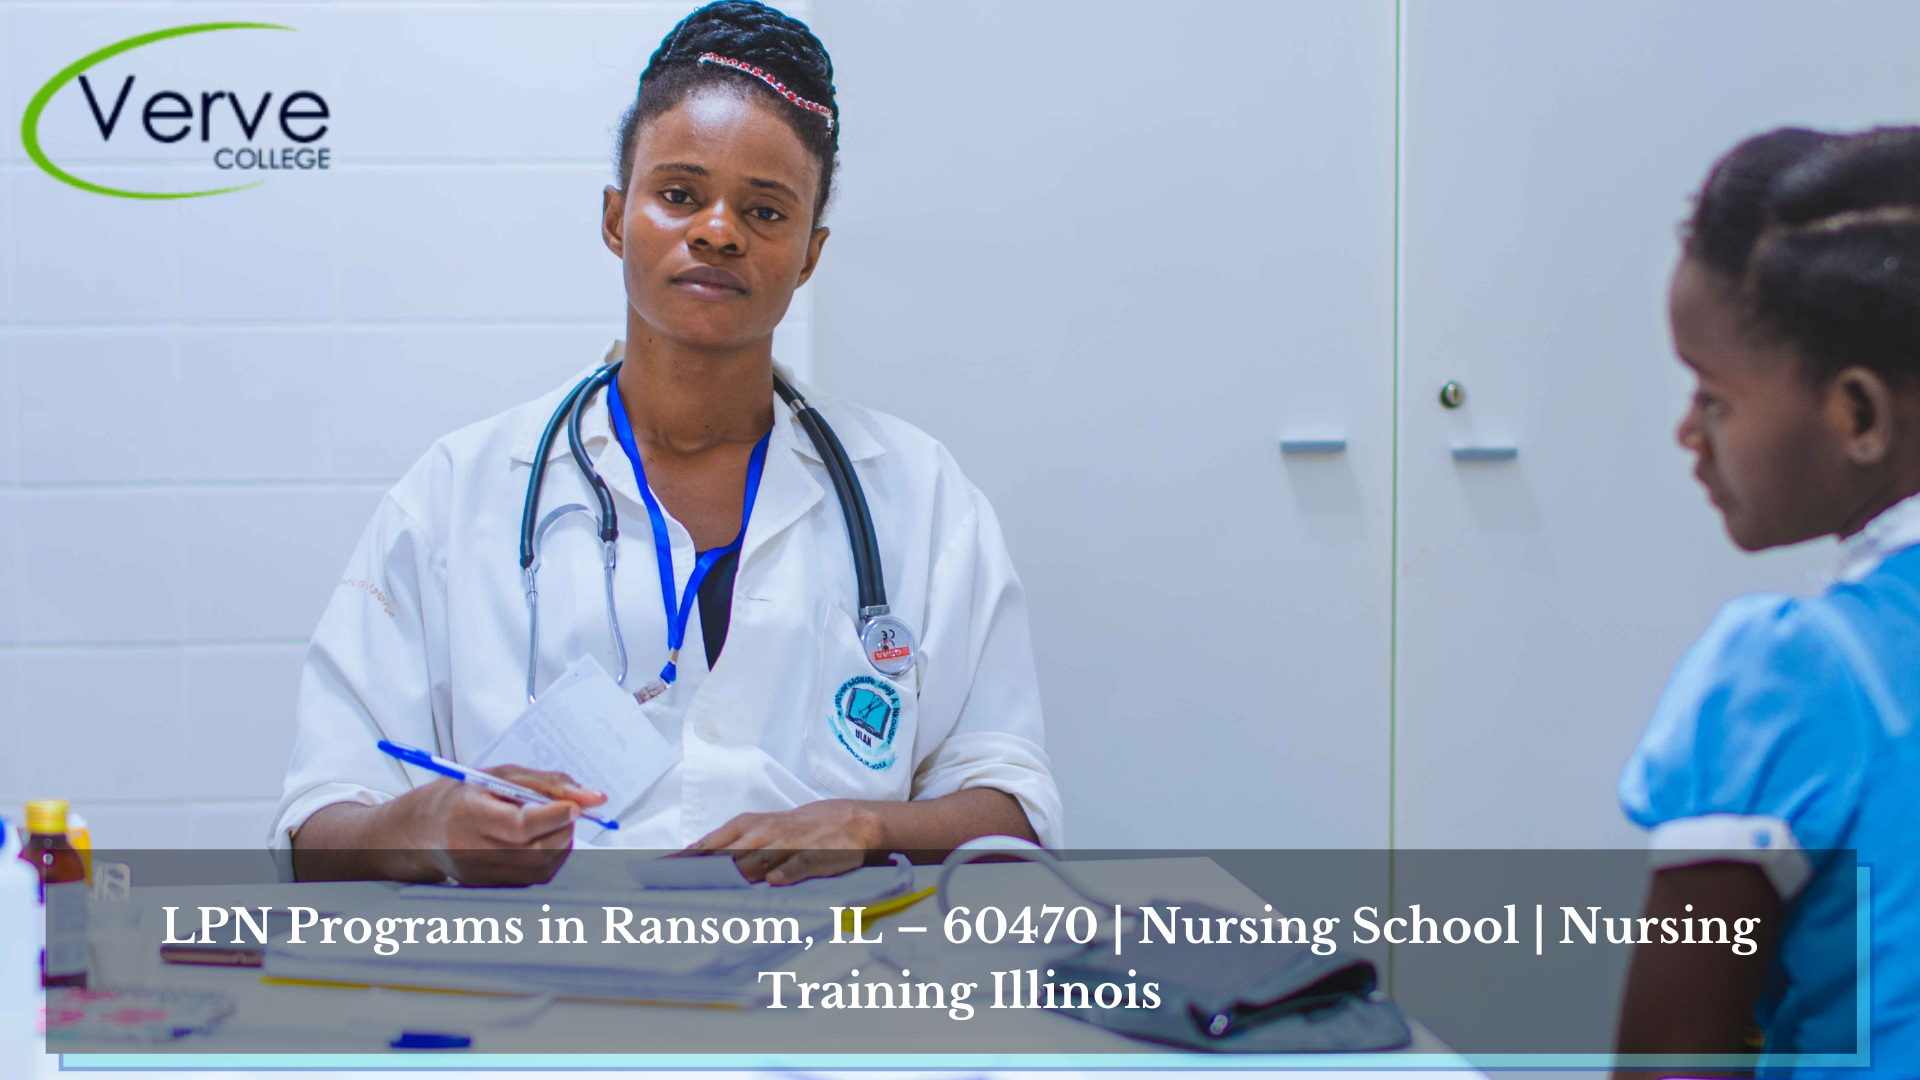 LPN Programs in Ransom, IL – 60470 | Nursing School | Nursing Training Illinois